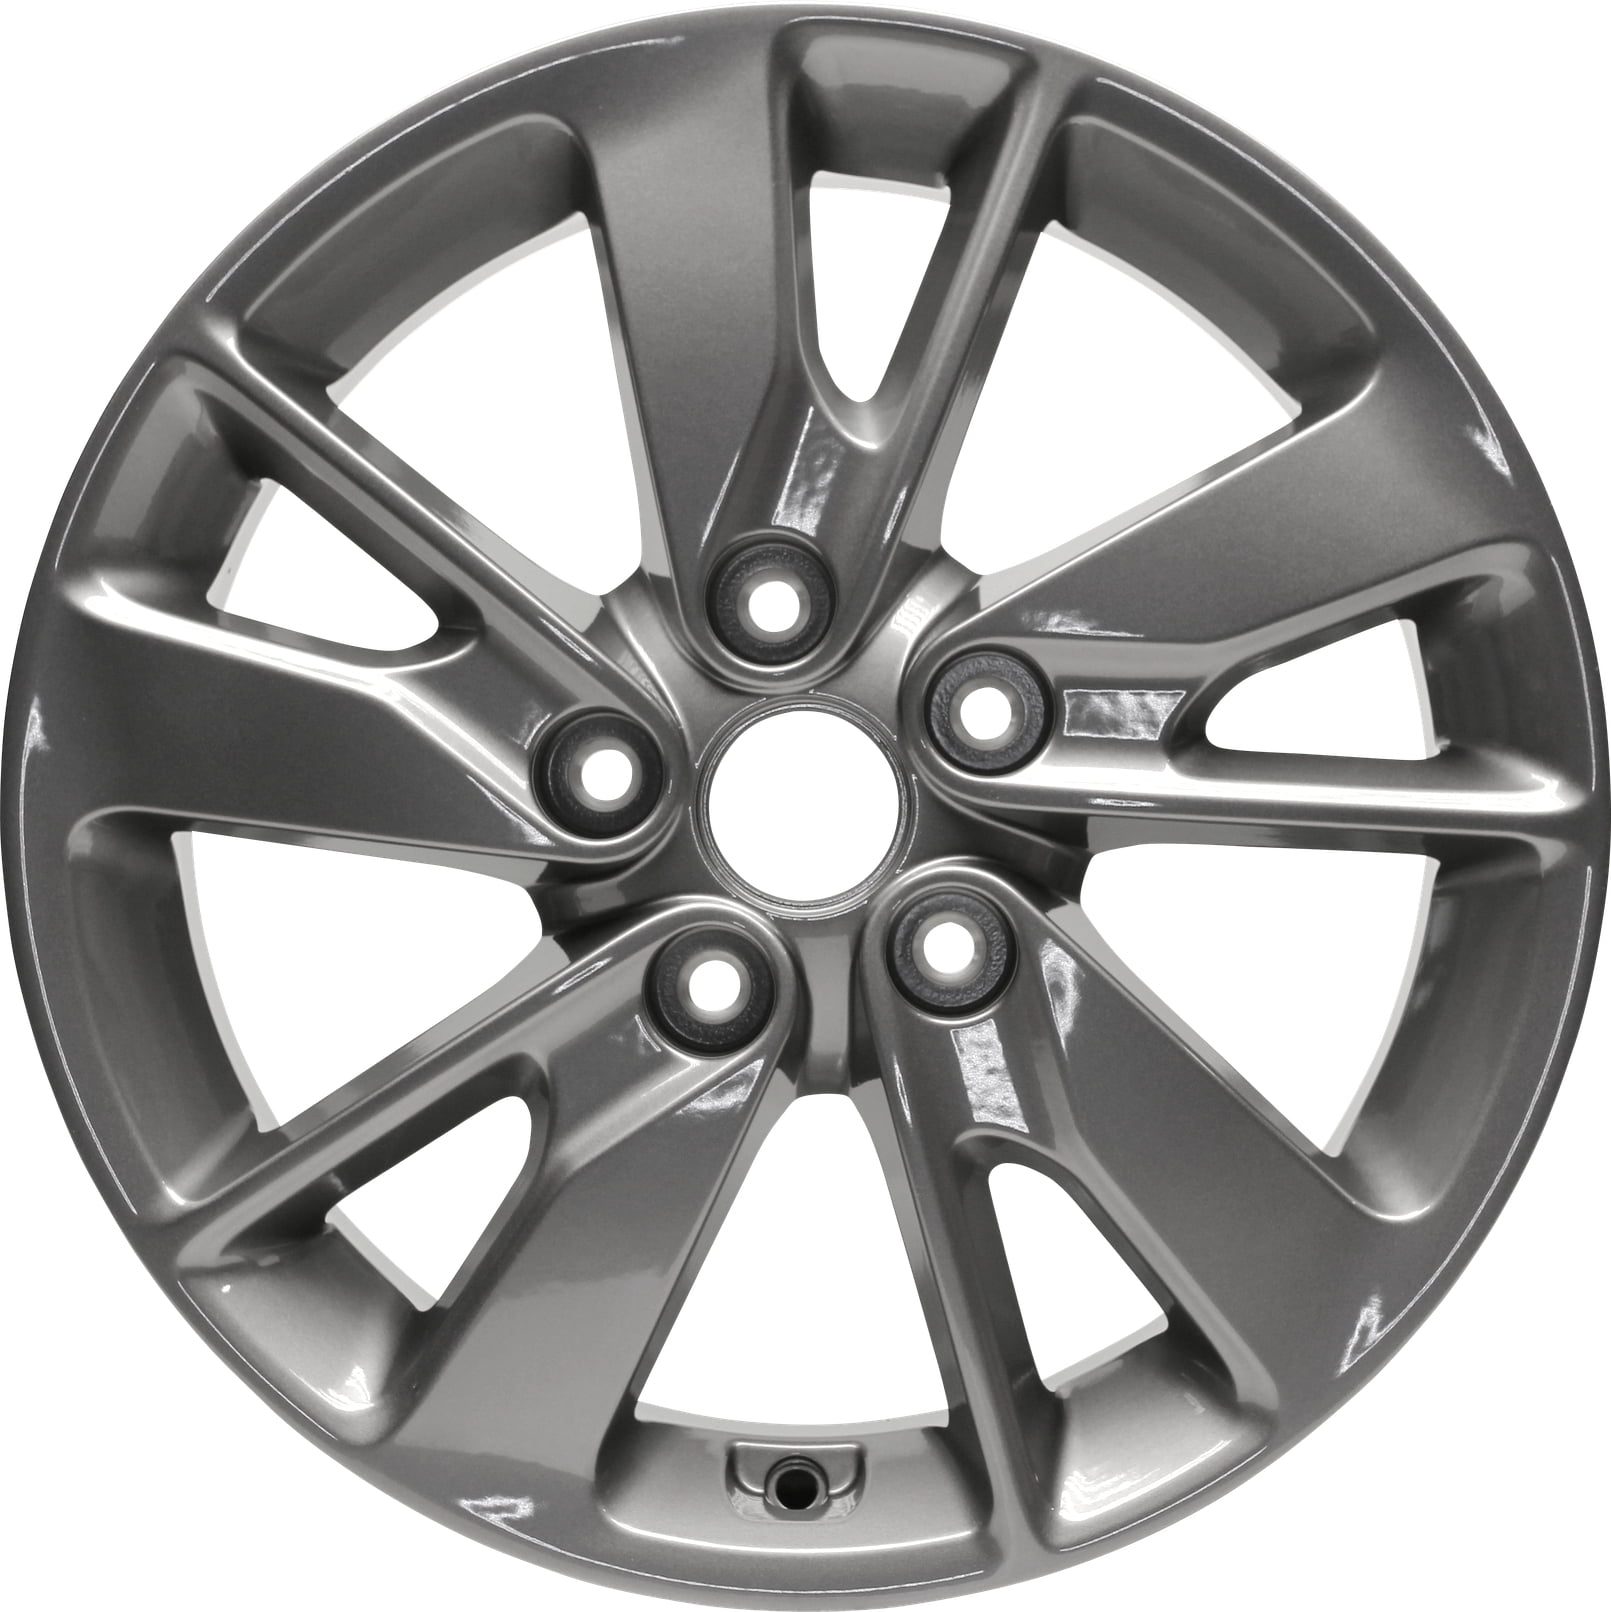 New Aluminum Alloy Wheel Rim 16 Inch Fits 1618 Kia Optima 5114.3mm 10